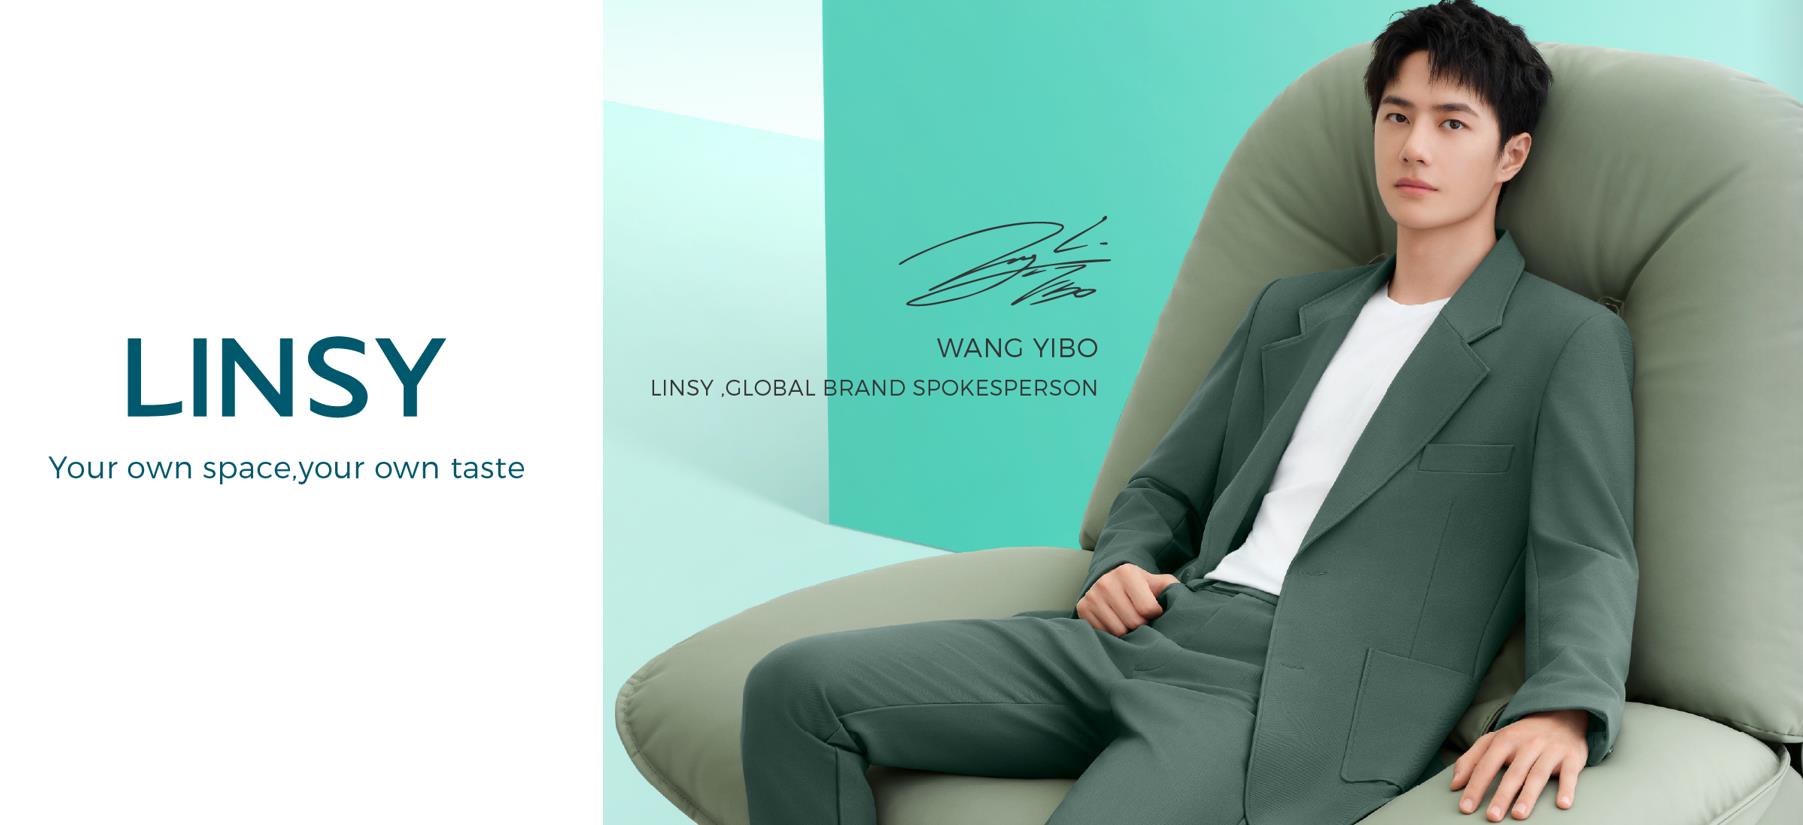 WANG YIBO, portavoz de marca global de LINSY
